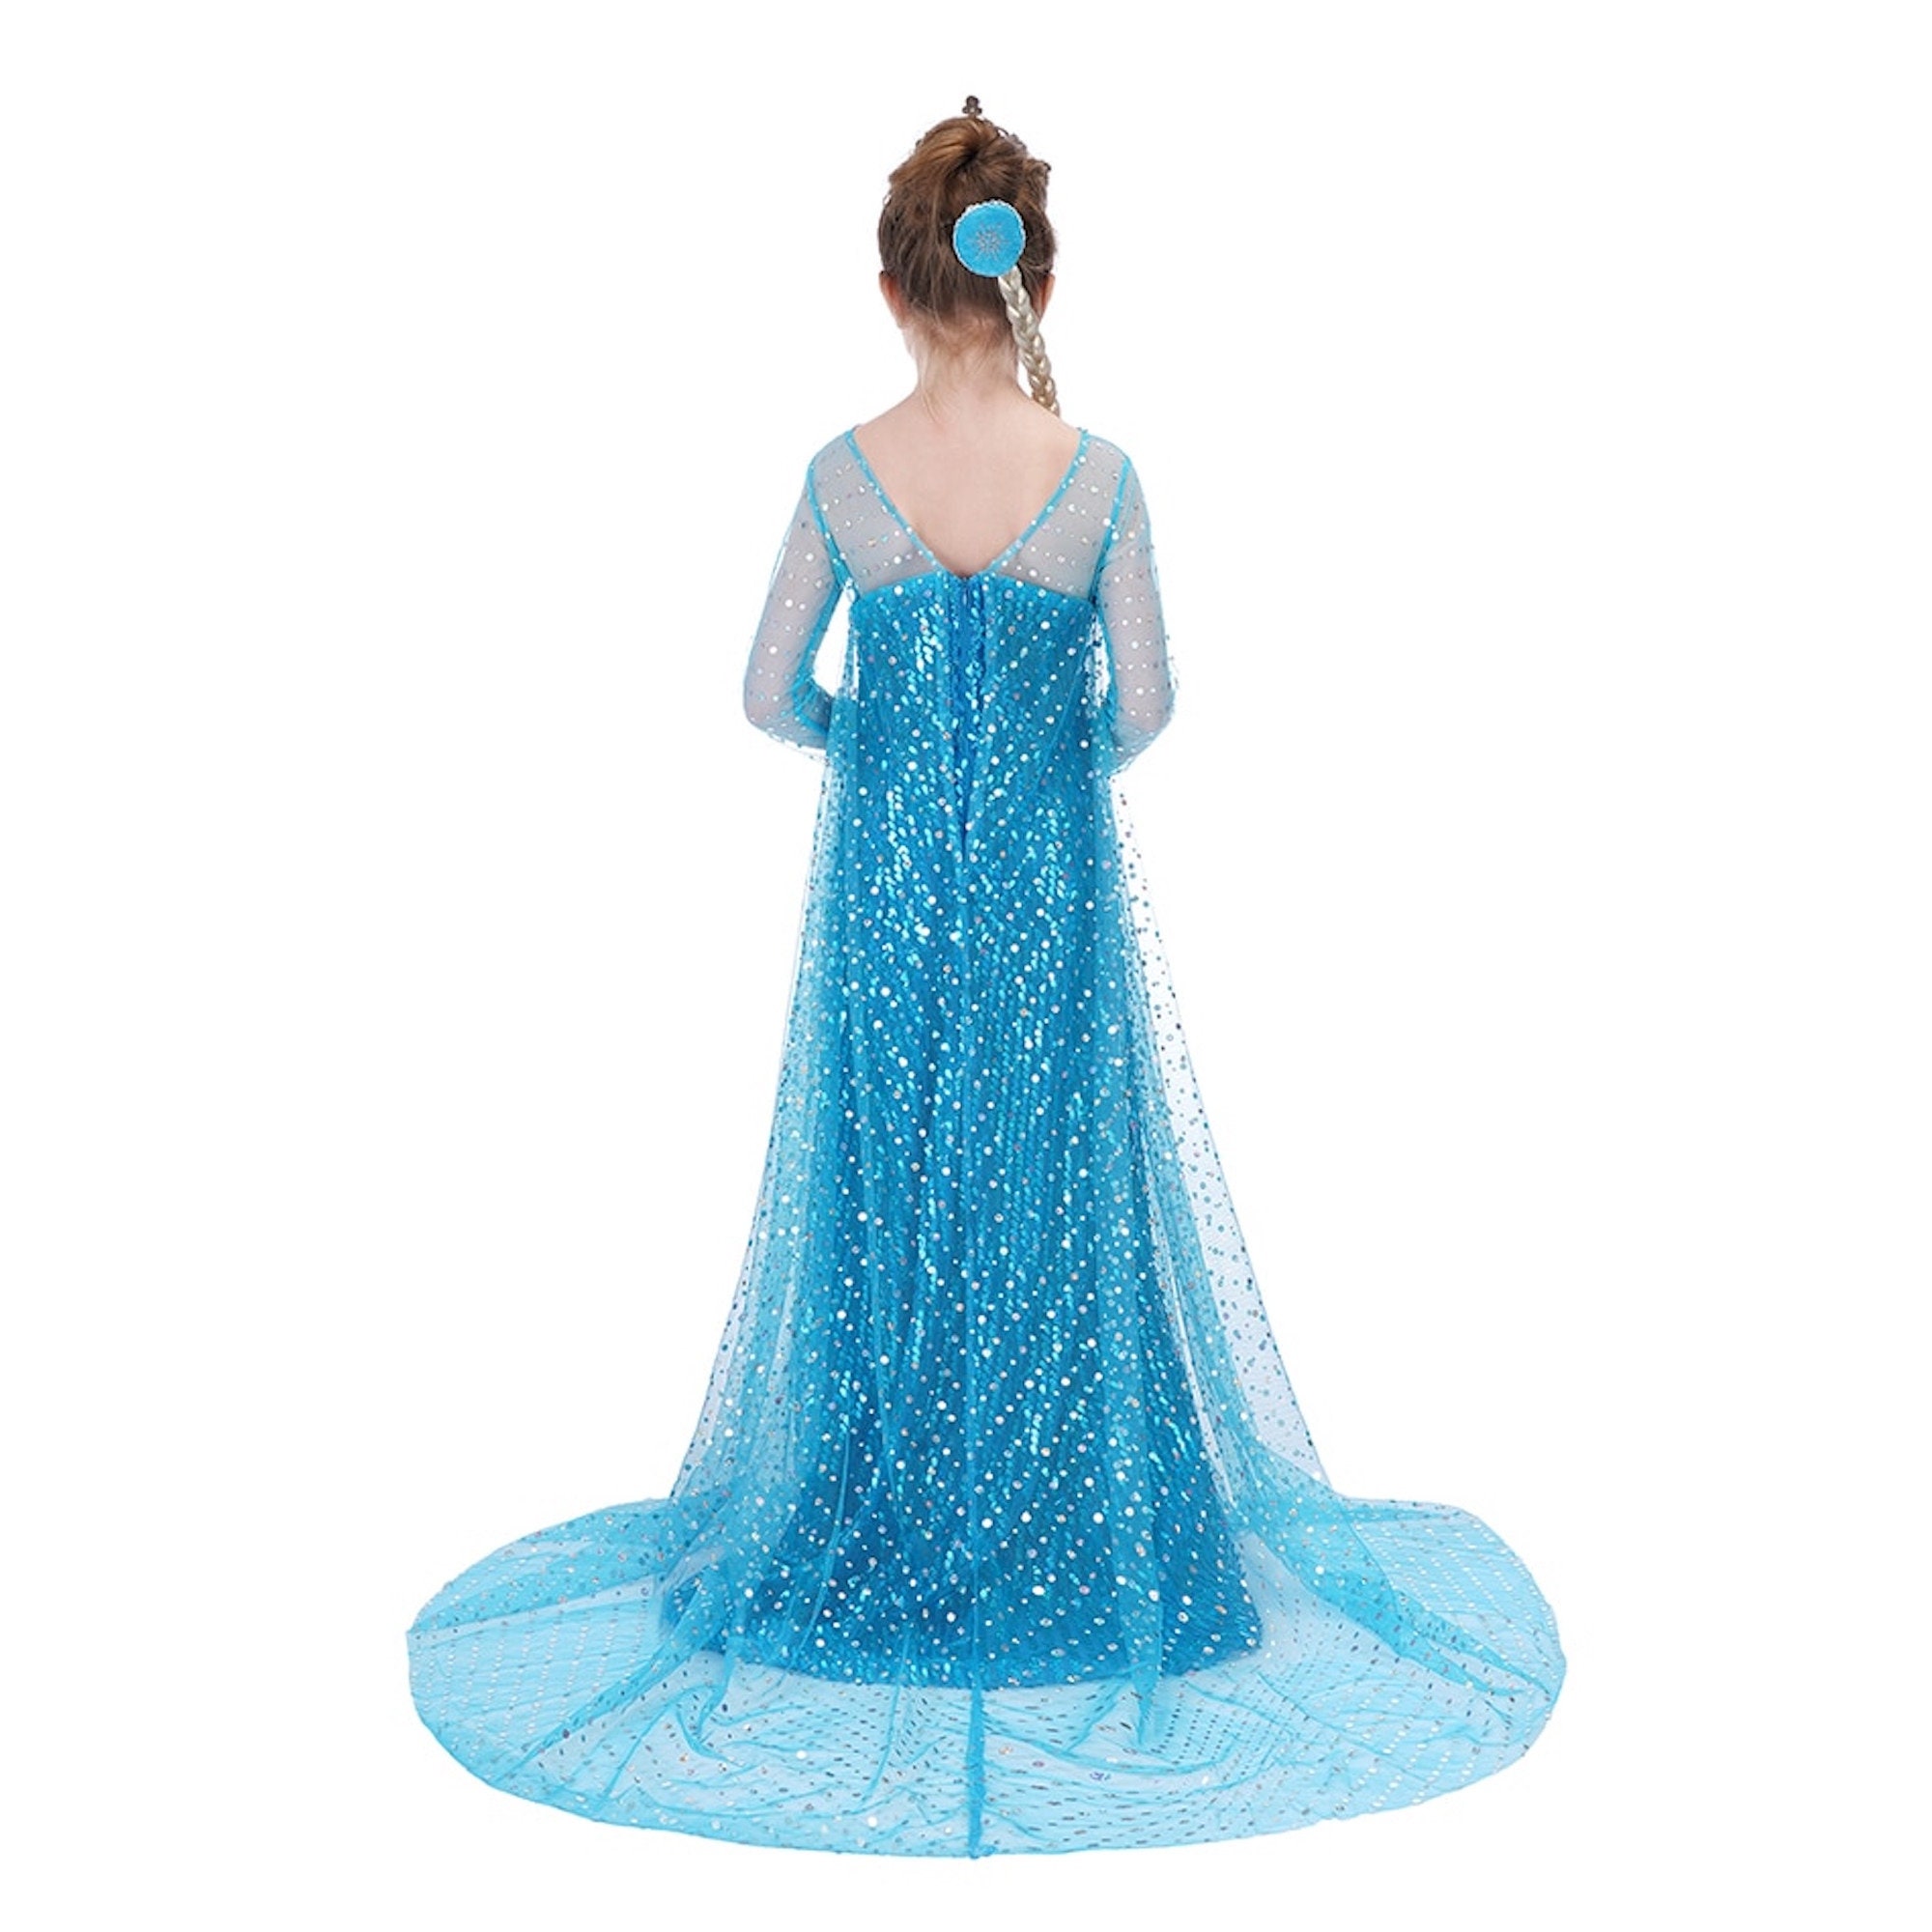 Halloween Costumes | Frozen Inspired Gown & Cape Set | Mia Belle Girls